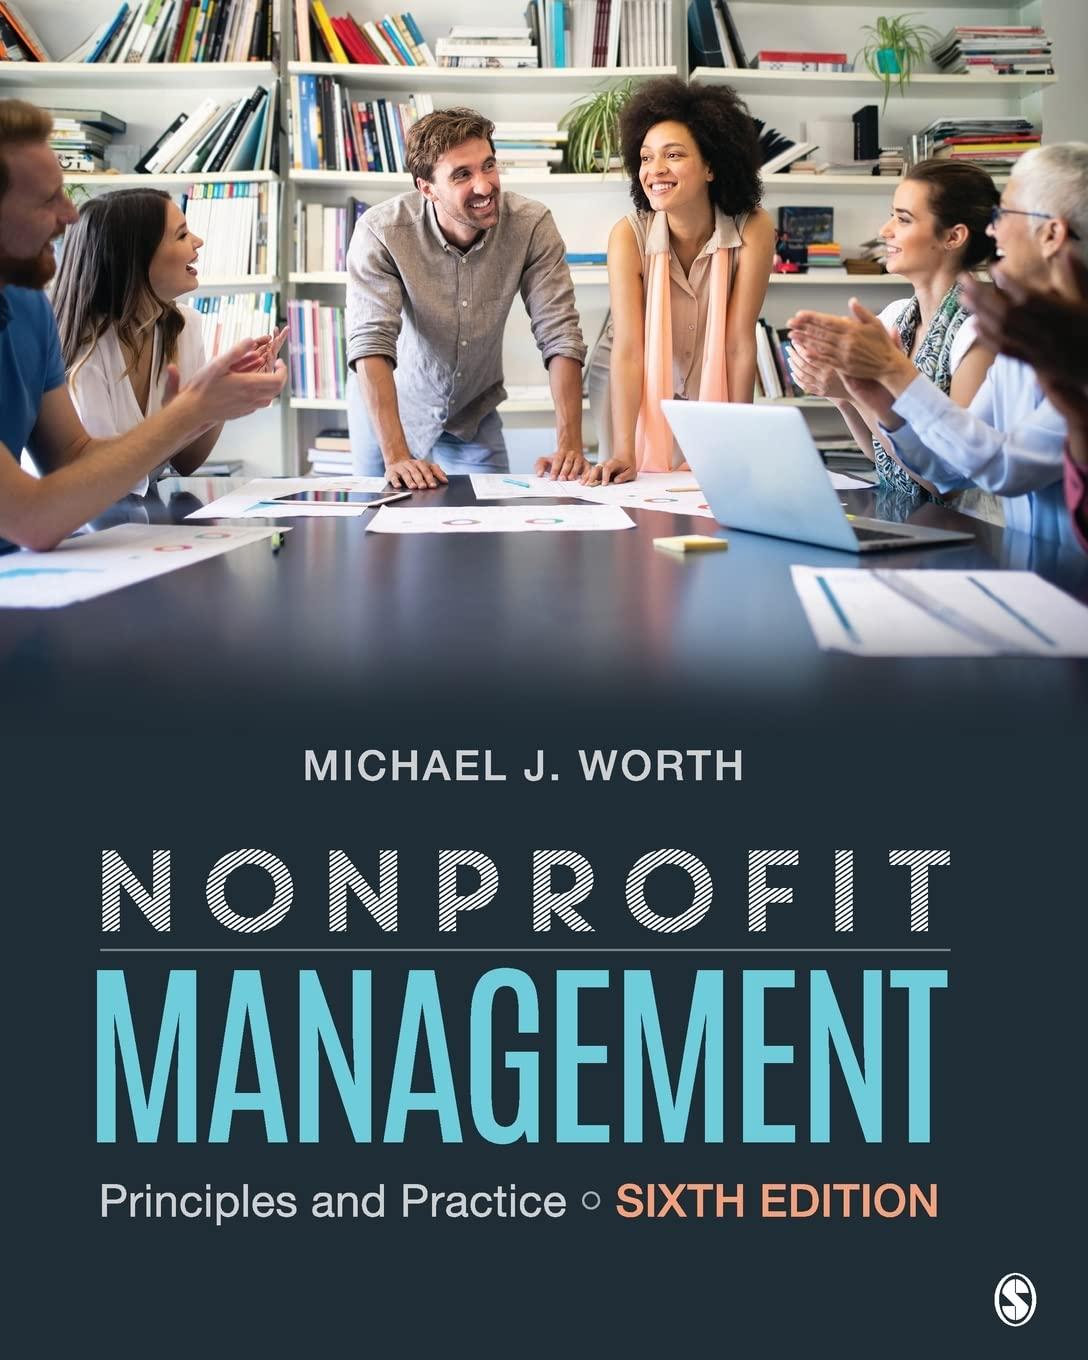 nonprofit management principles and practice 6th edition michael j. worth 1544379986, 978-1544379982